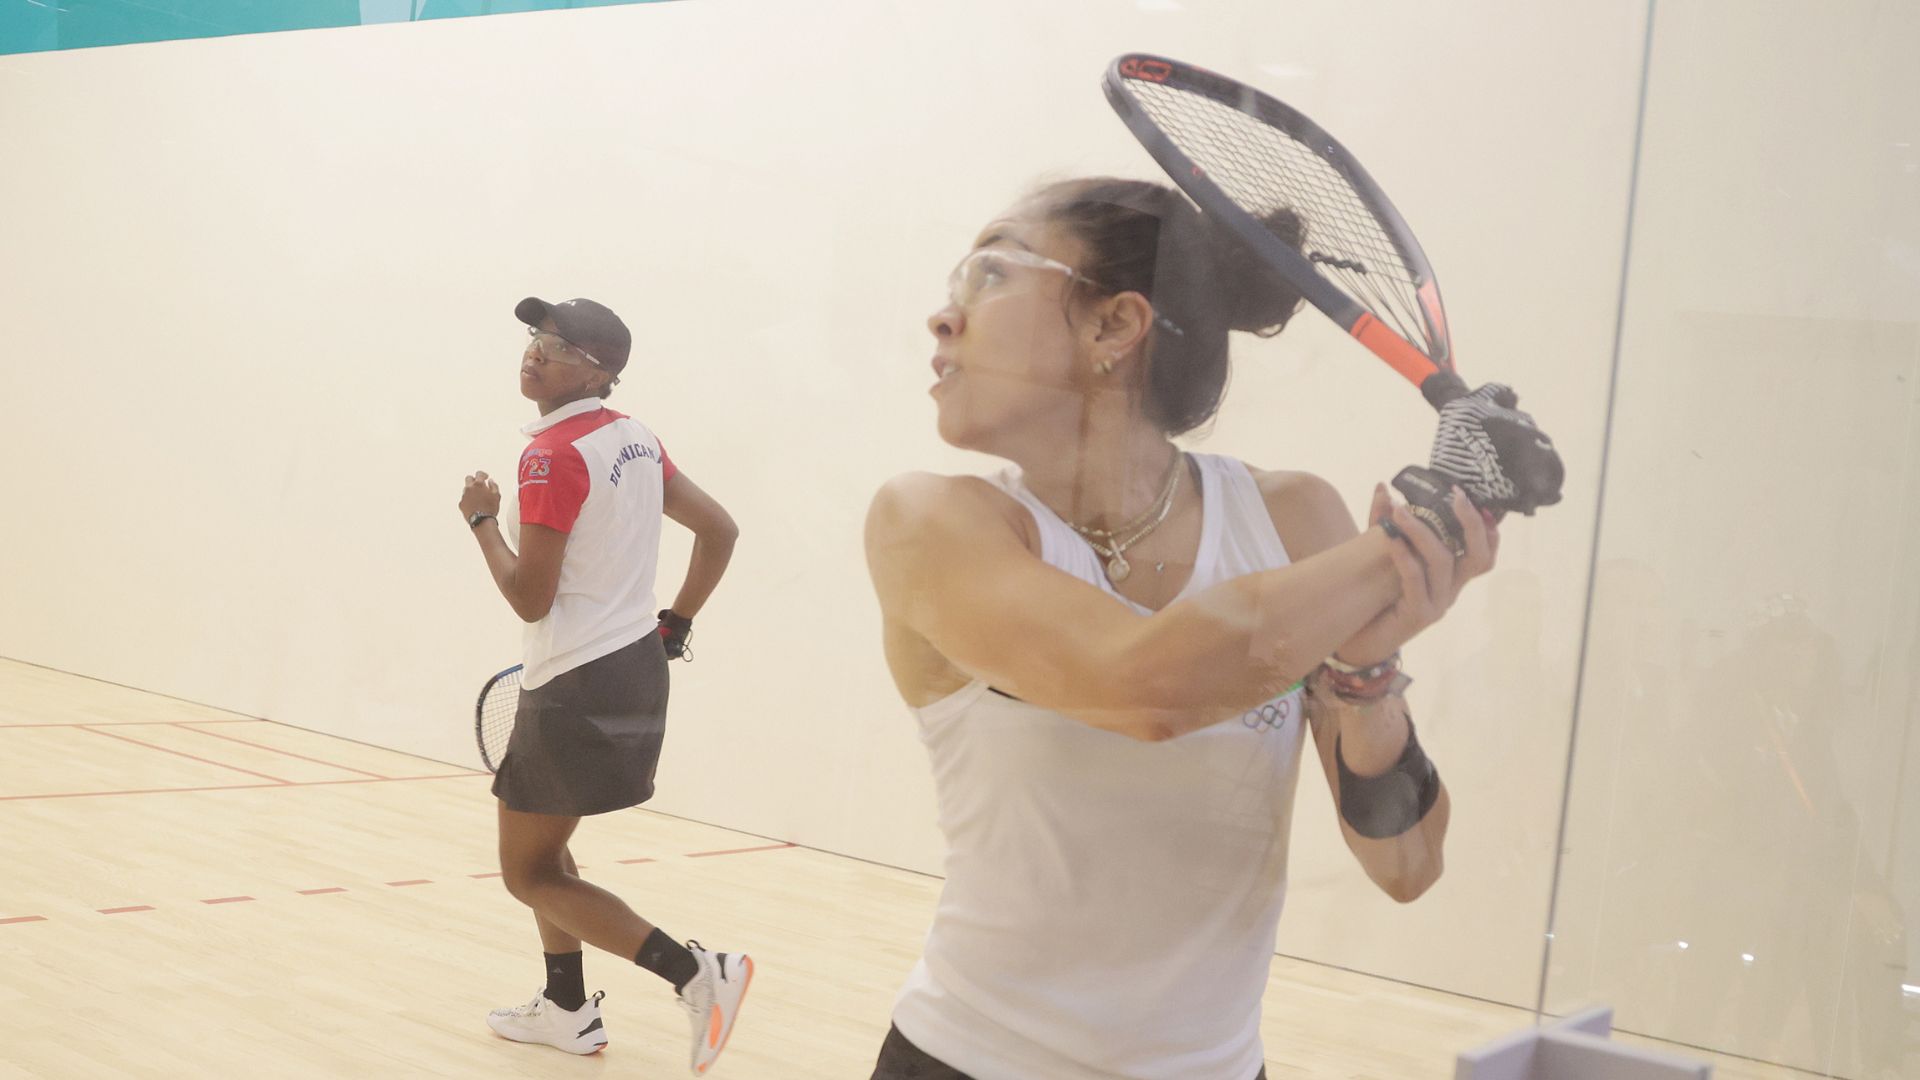 Racquetball: triunfal debut de la multicampeona Paola Longoria